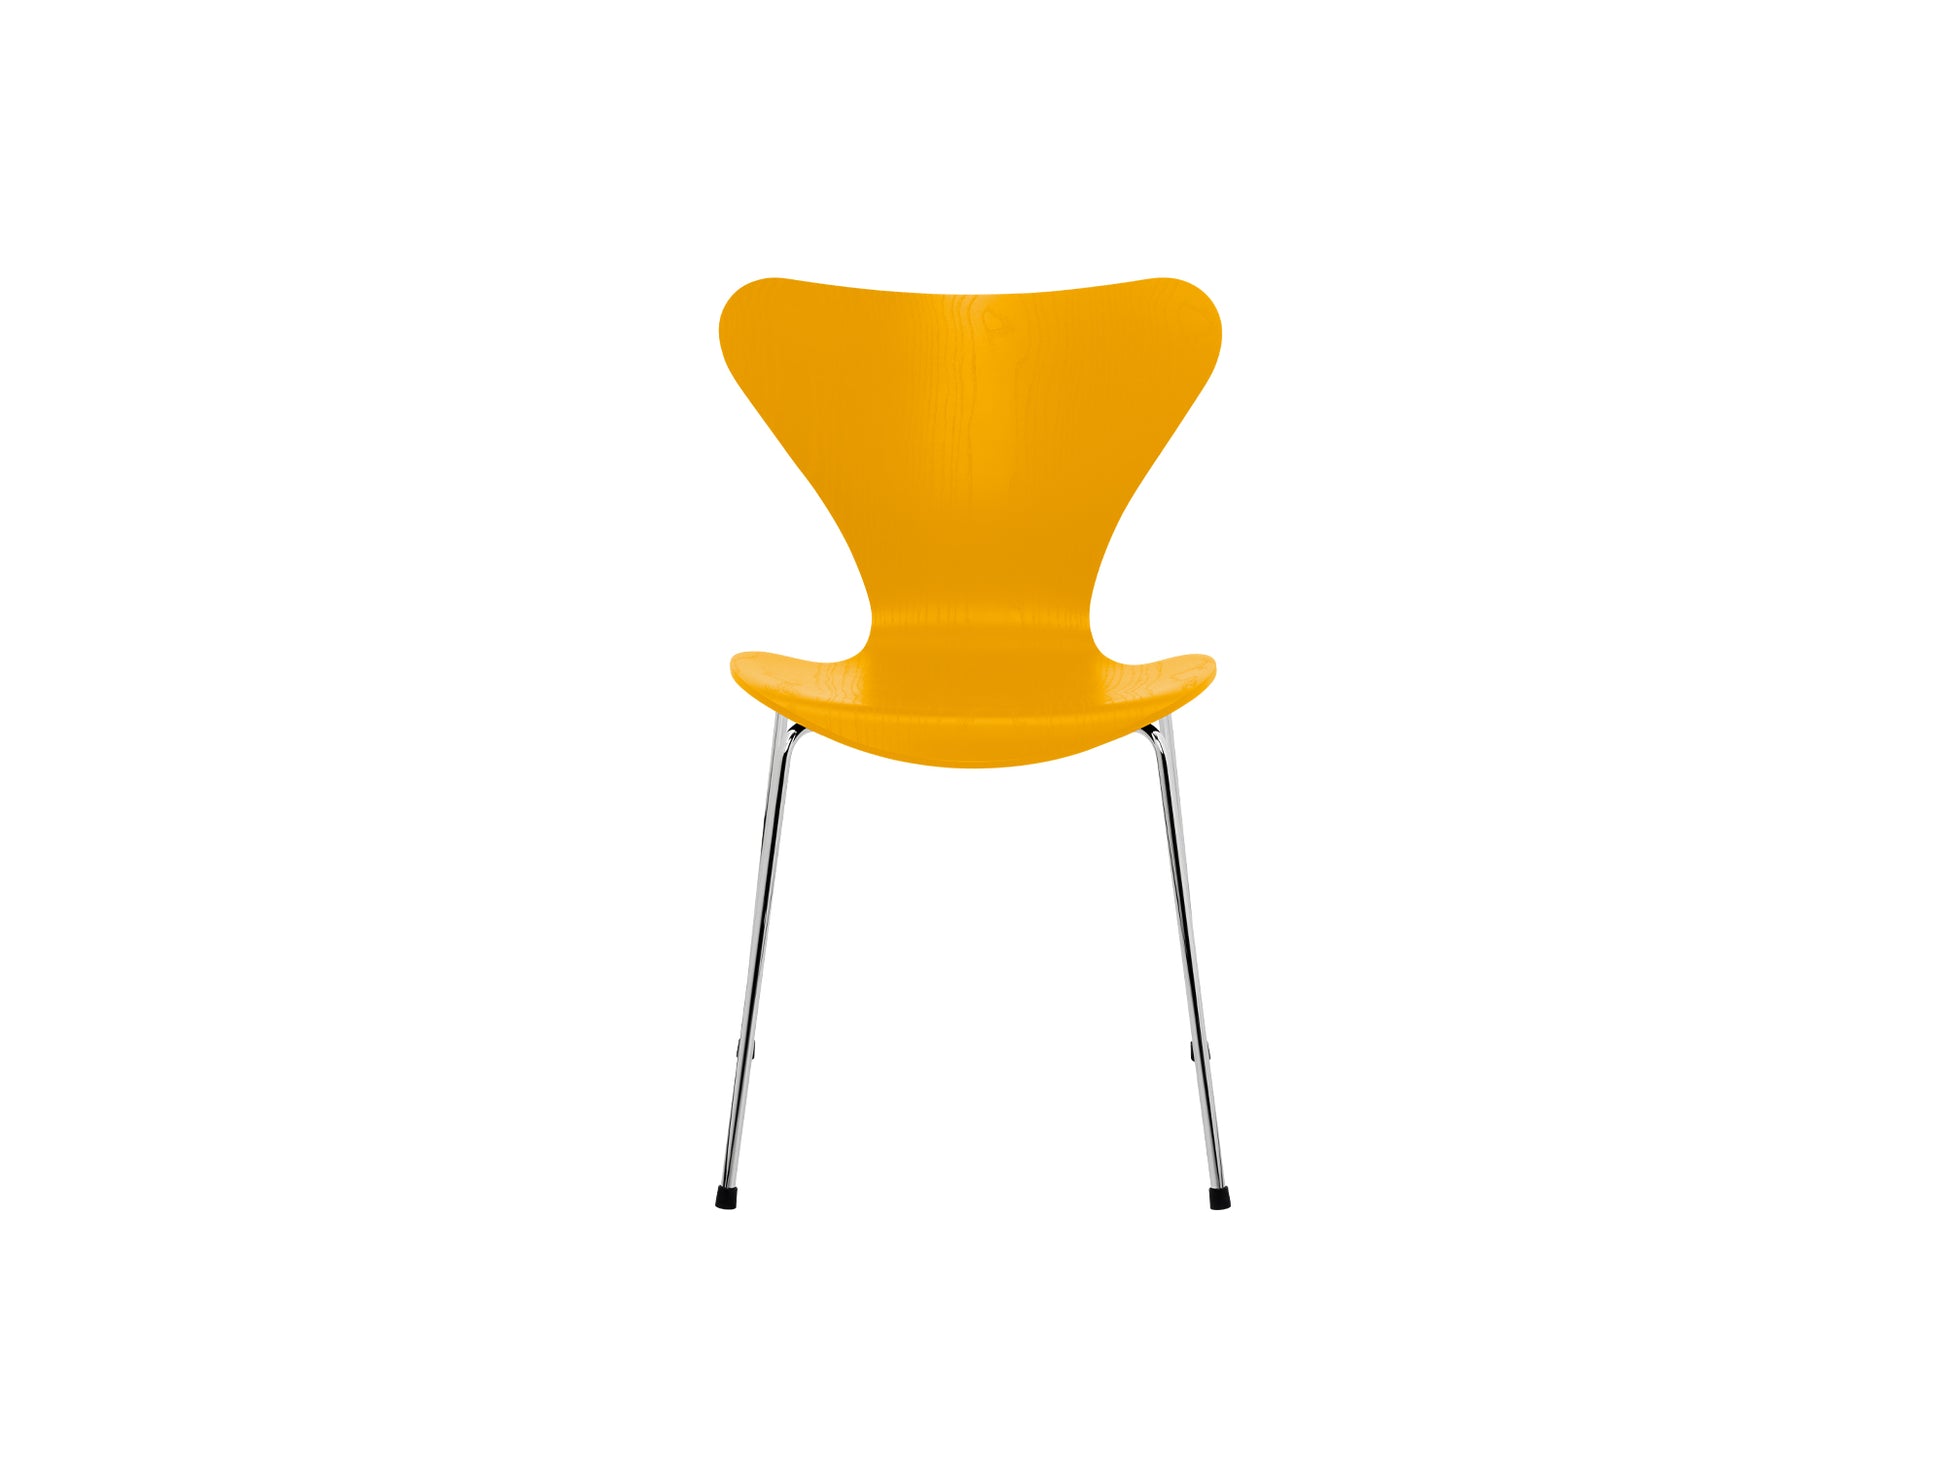 Series 7™ 3107 Dining Chair by Fritz Hansen - True Yellow Coloured Ash Veneer Shell / Chromed Steel